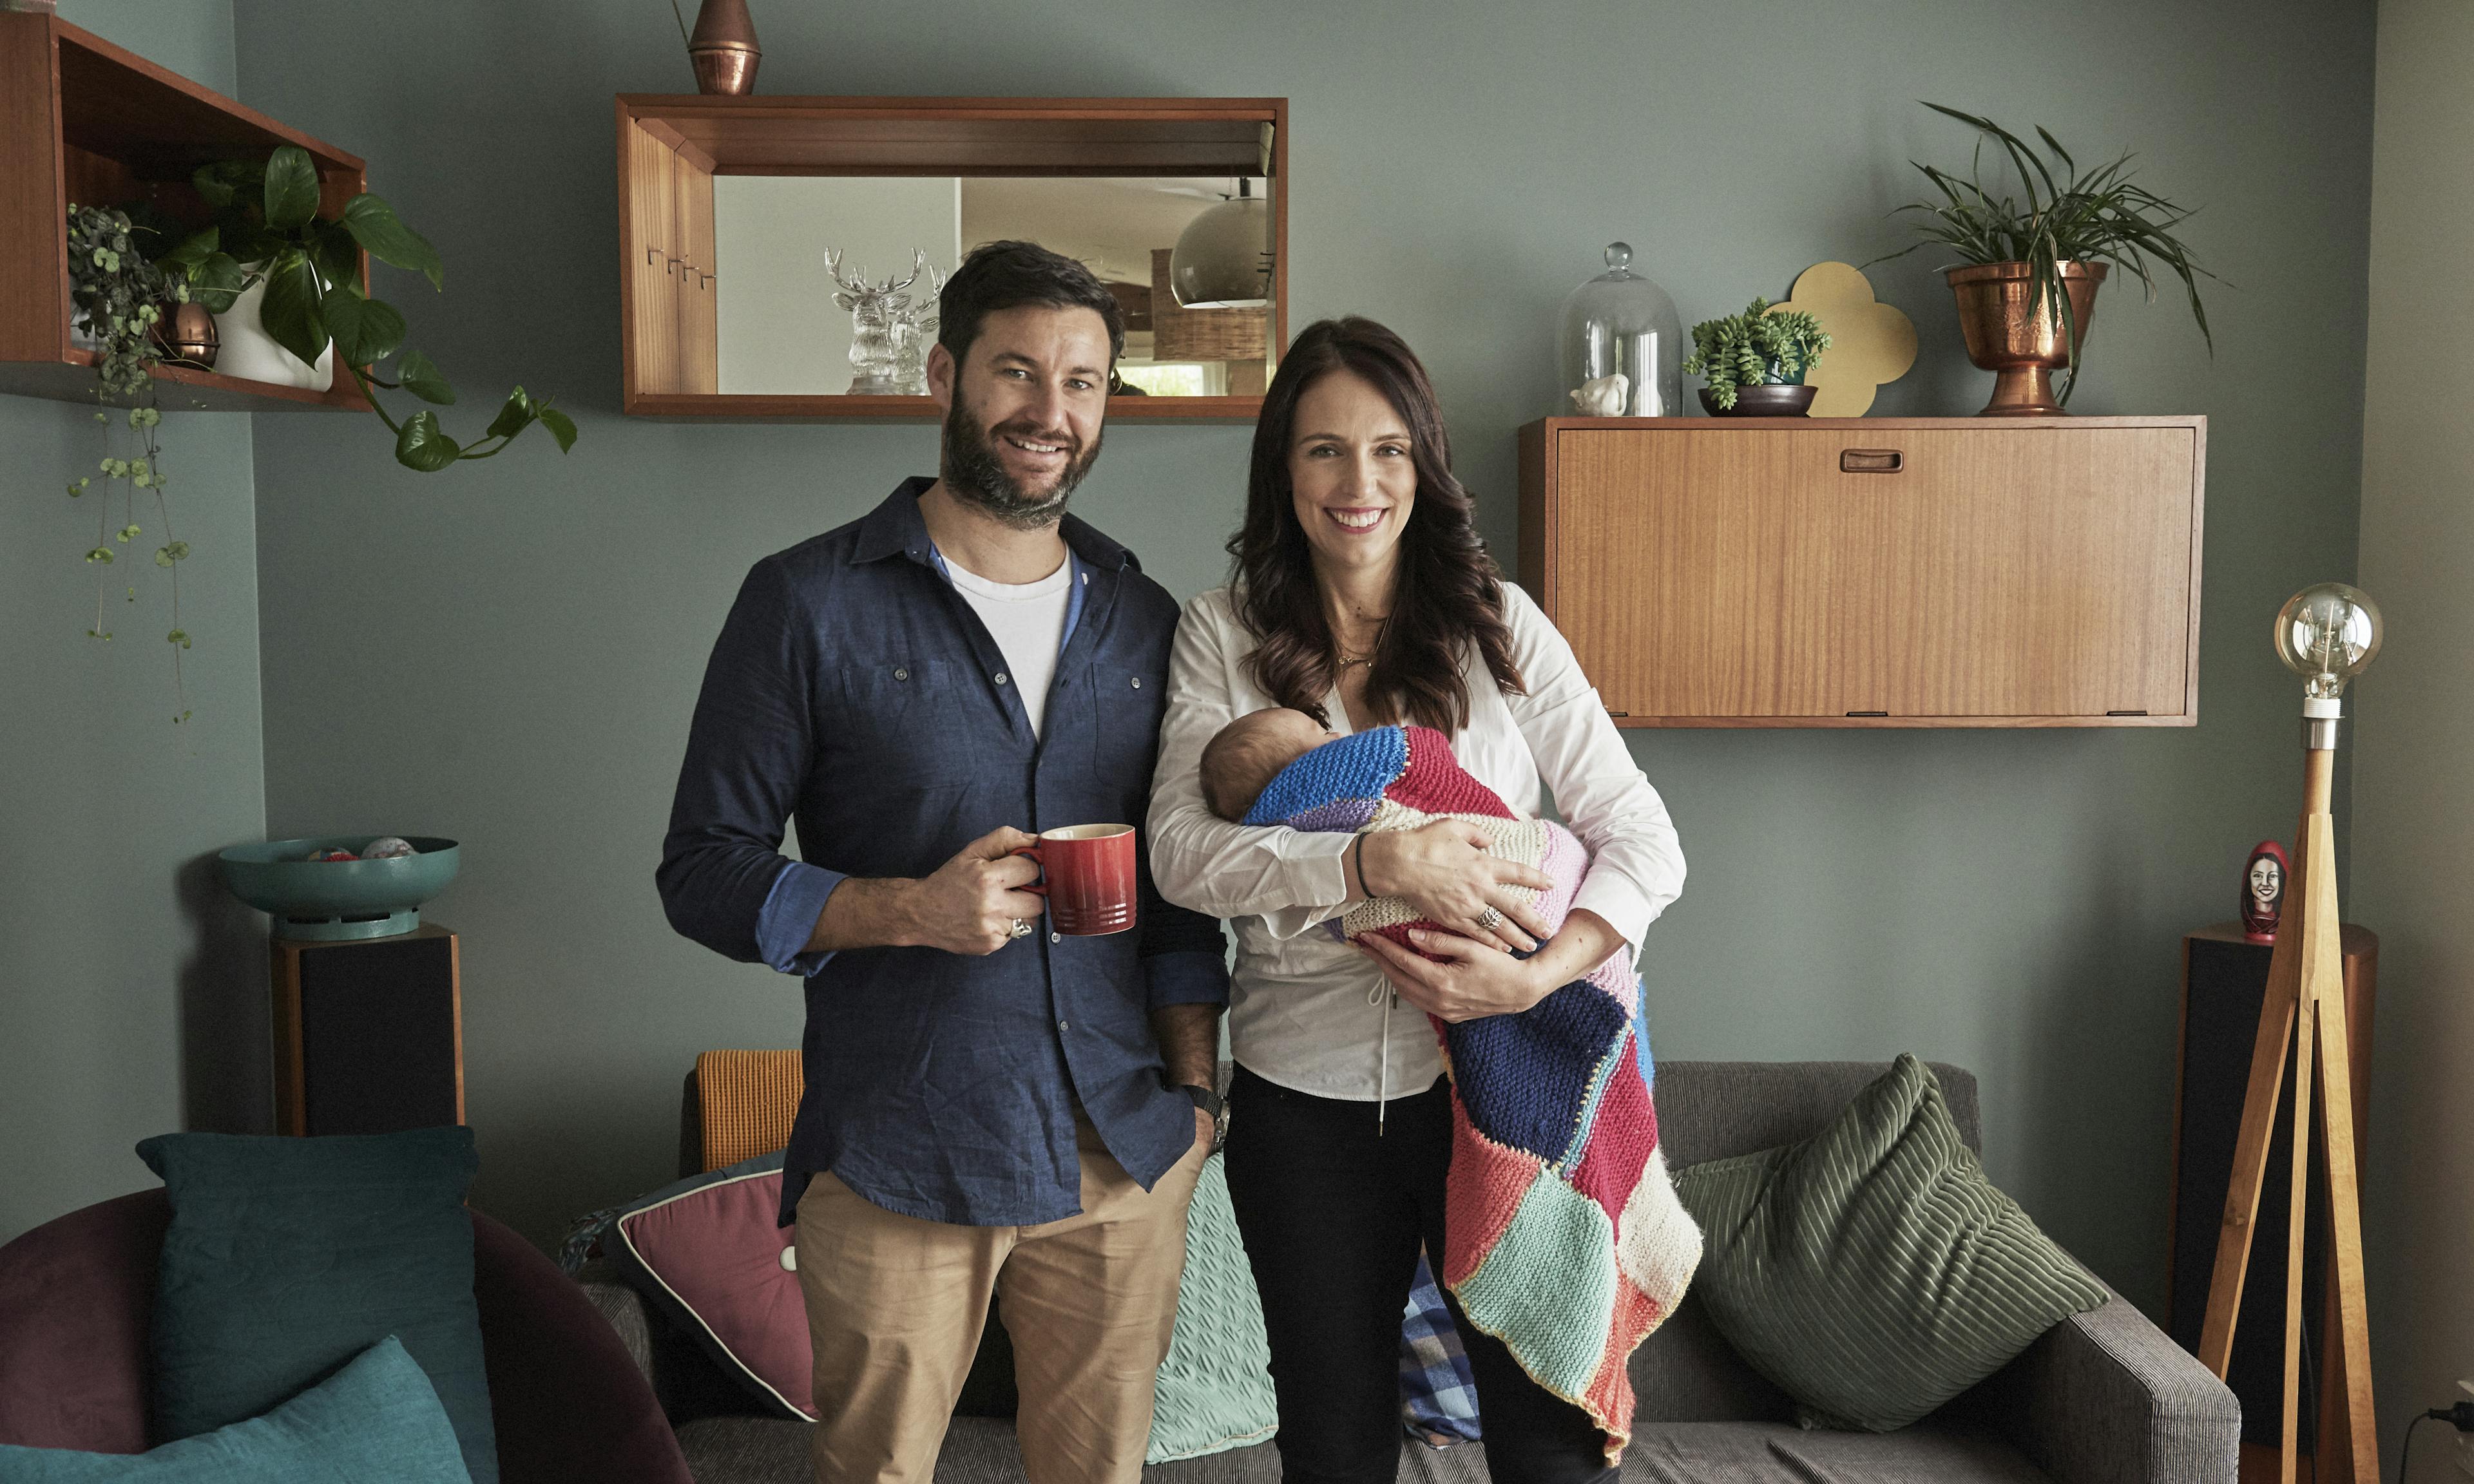 Clarke Gayford and Jacinda Ardern with their baby girl Neve